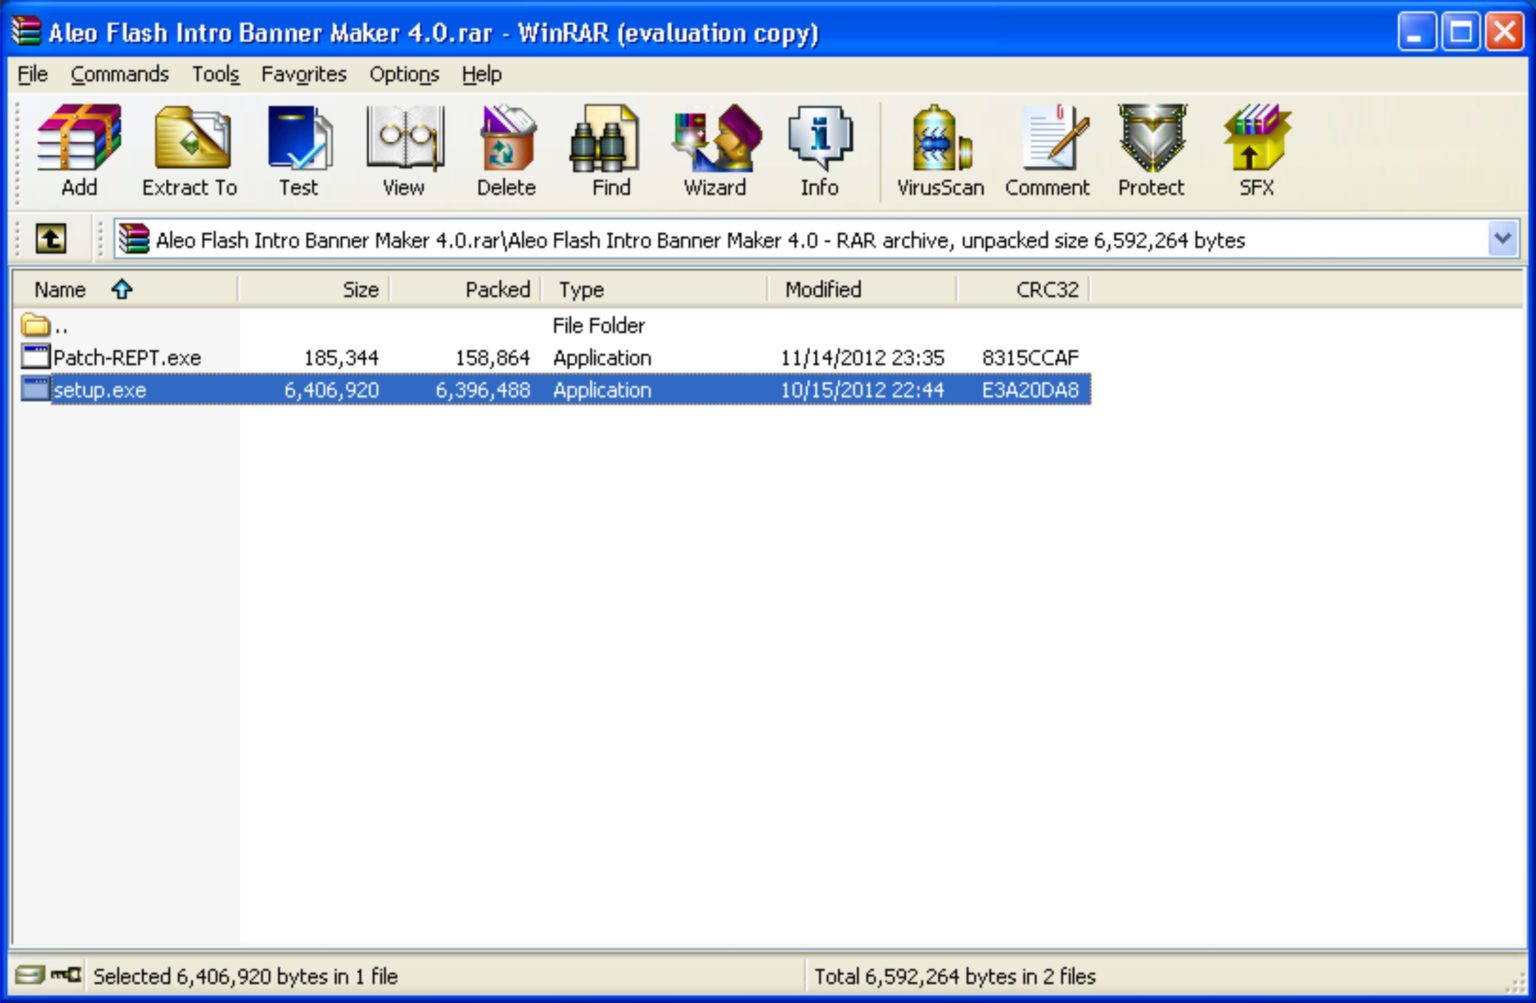 free winrar software download windows 7 64 bit